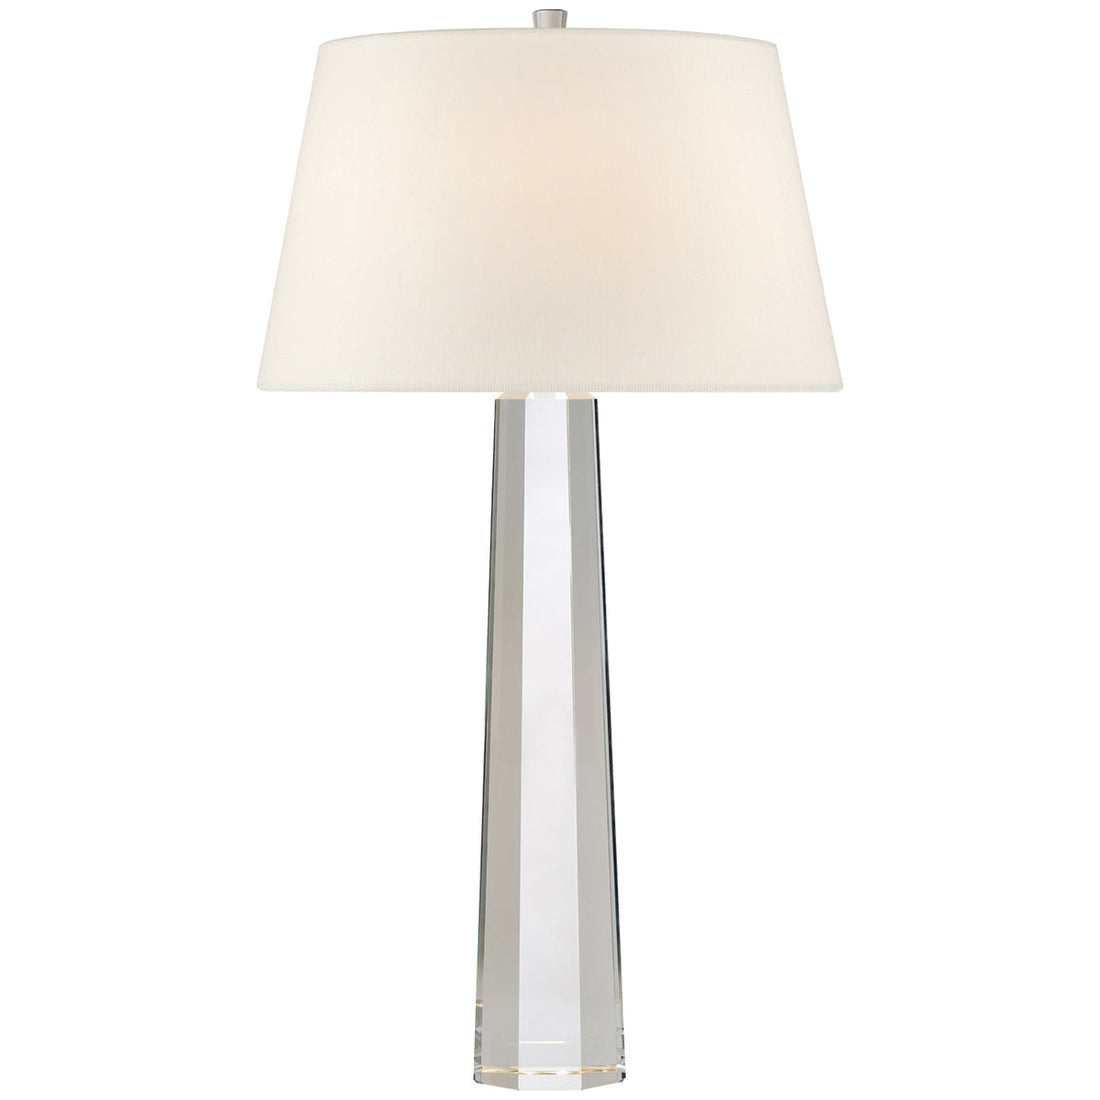 Visual Comfort Octagonal Spire Large Table Lamp